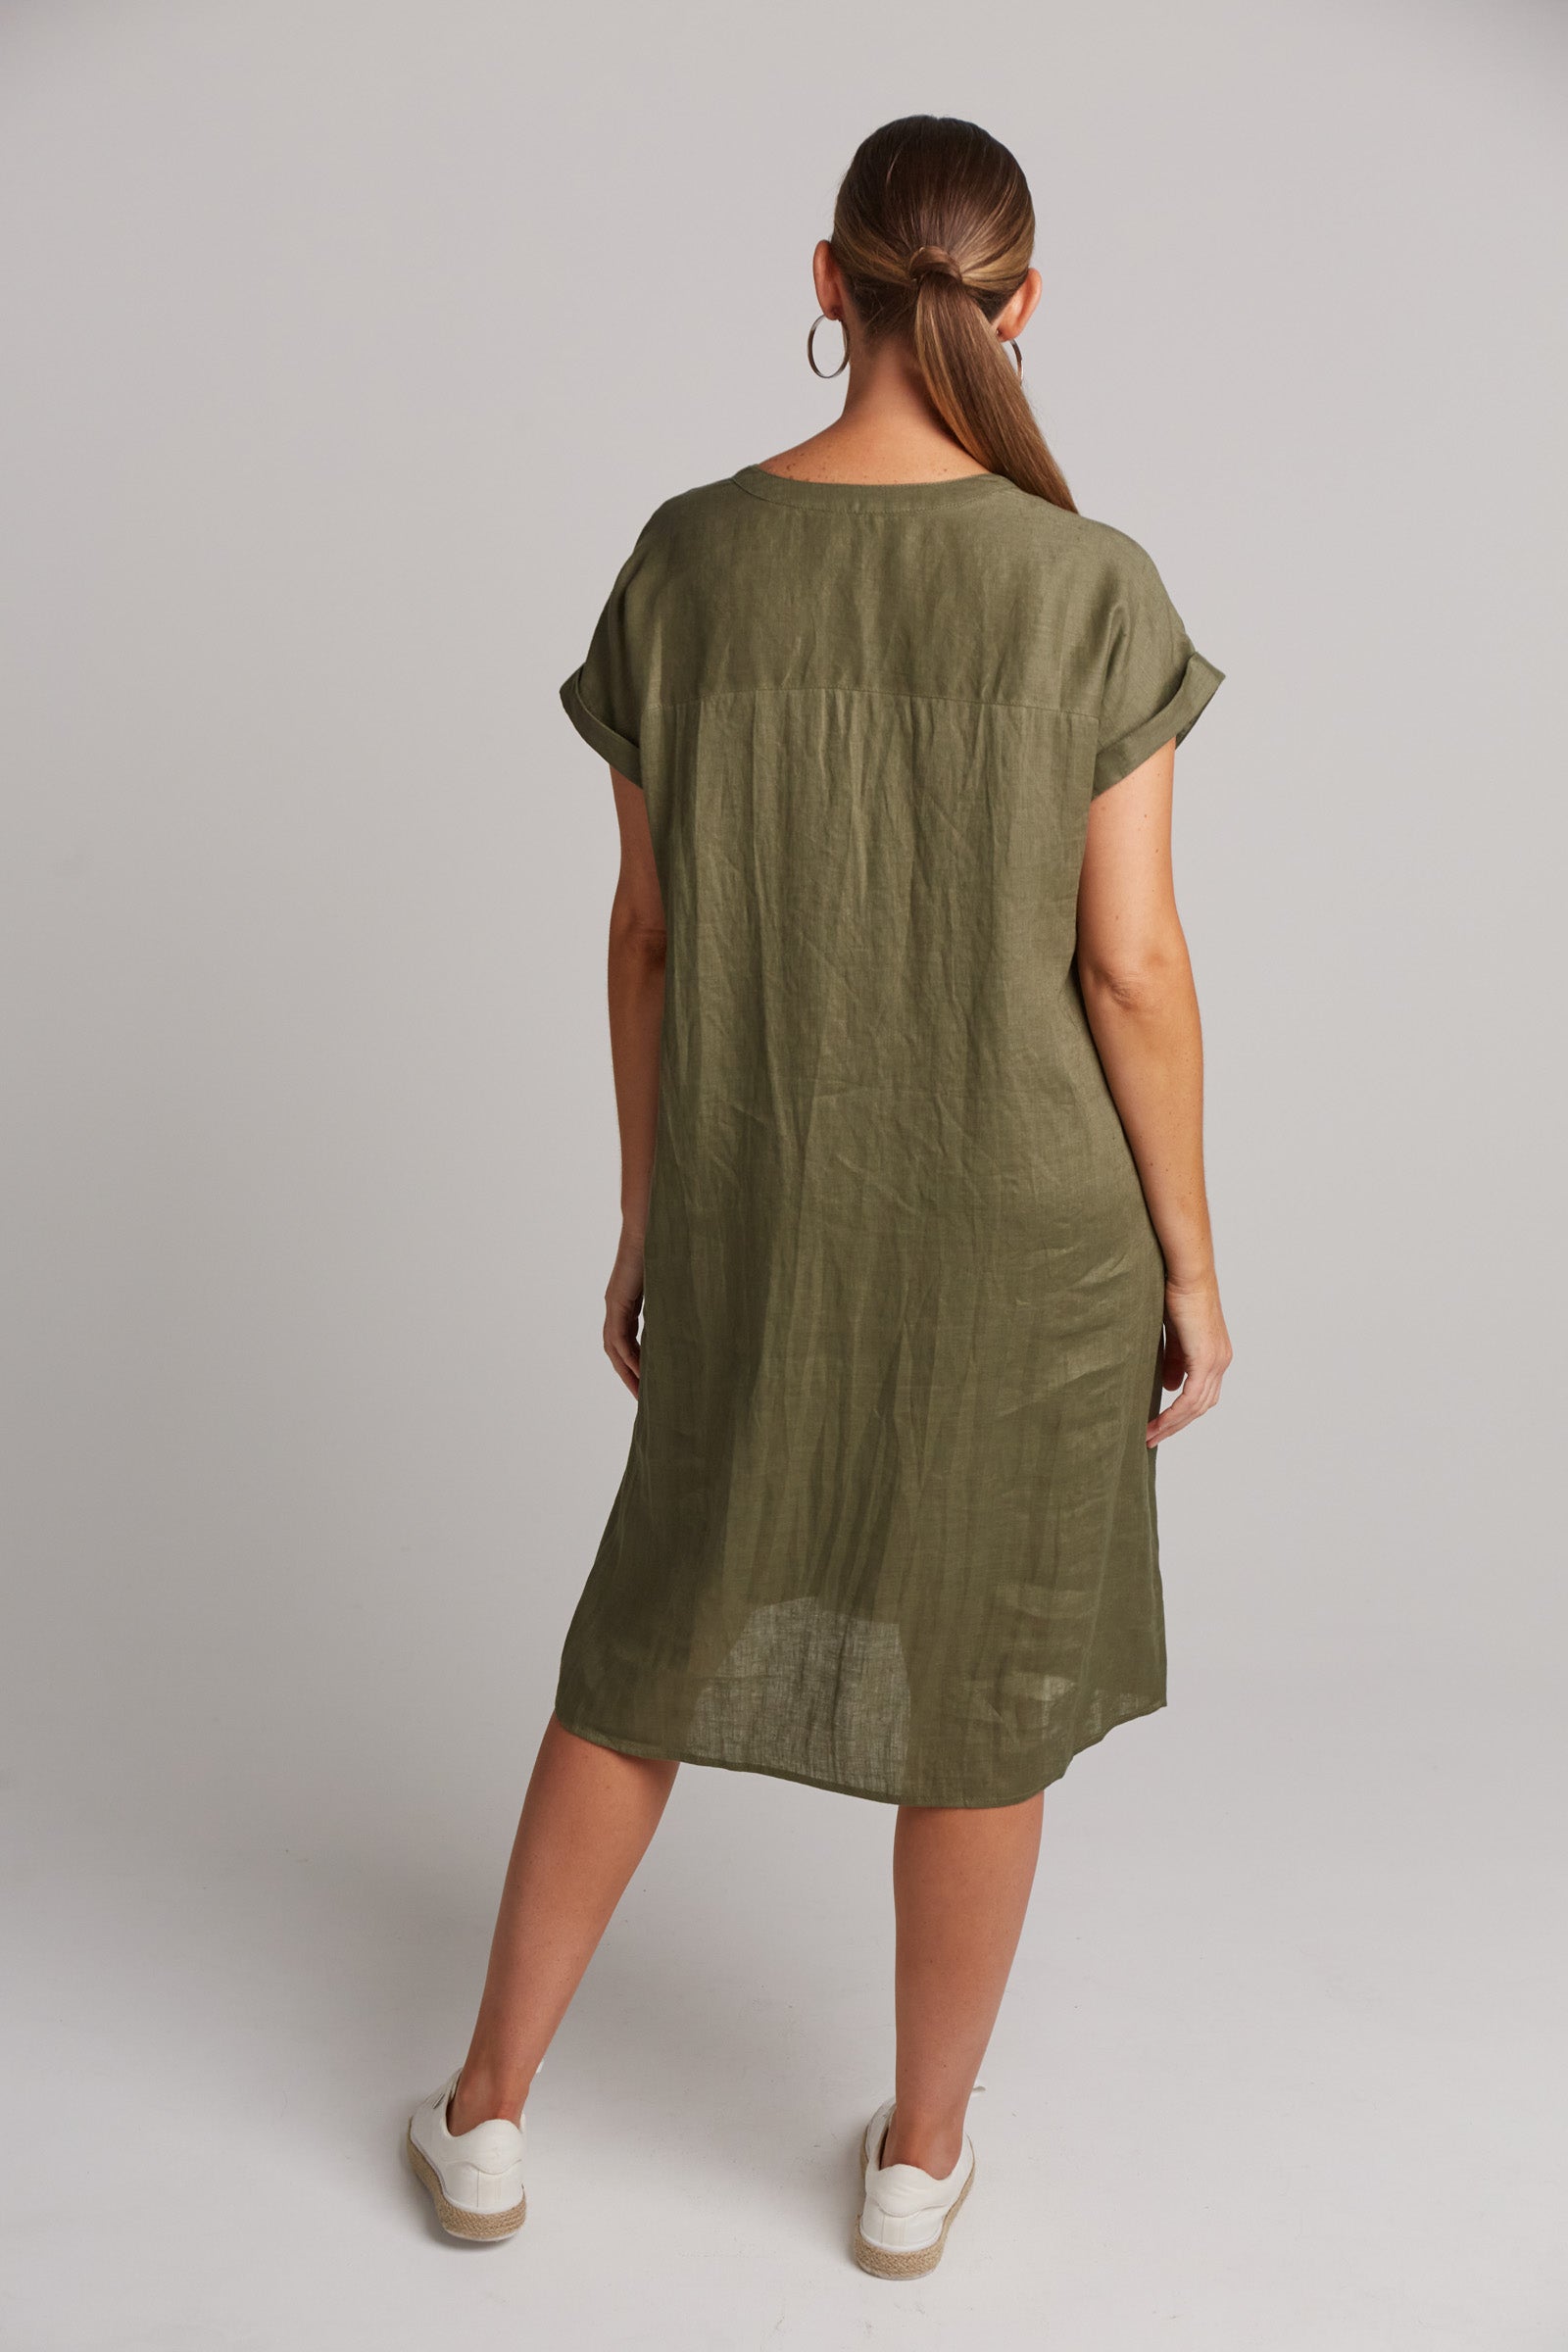 Studio Dress - Khaki - eb&ive Clothing - Dress Mid Linen